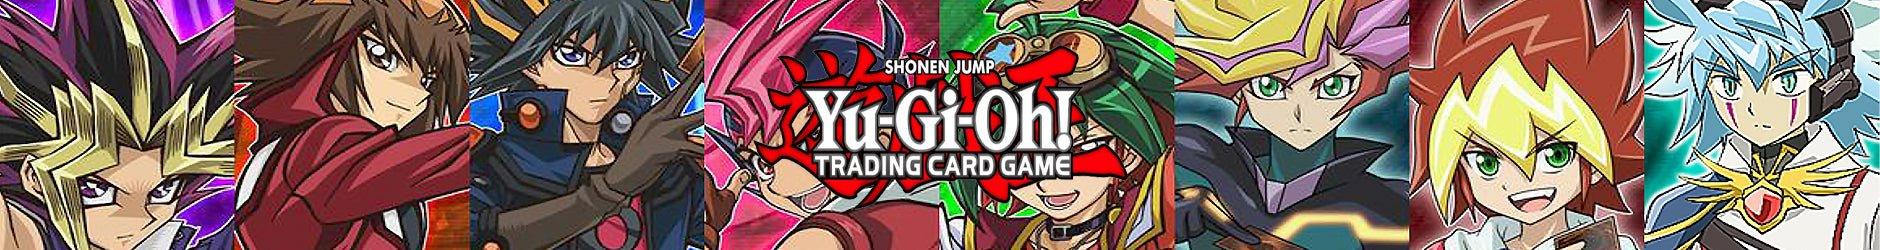 Yu-Gi-Oh! Sales - Romulus Games